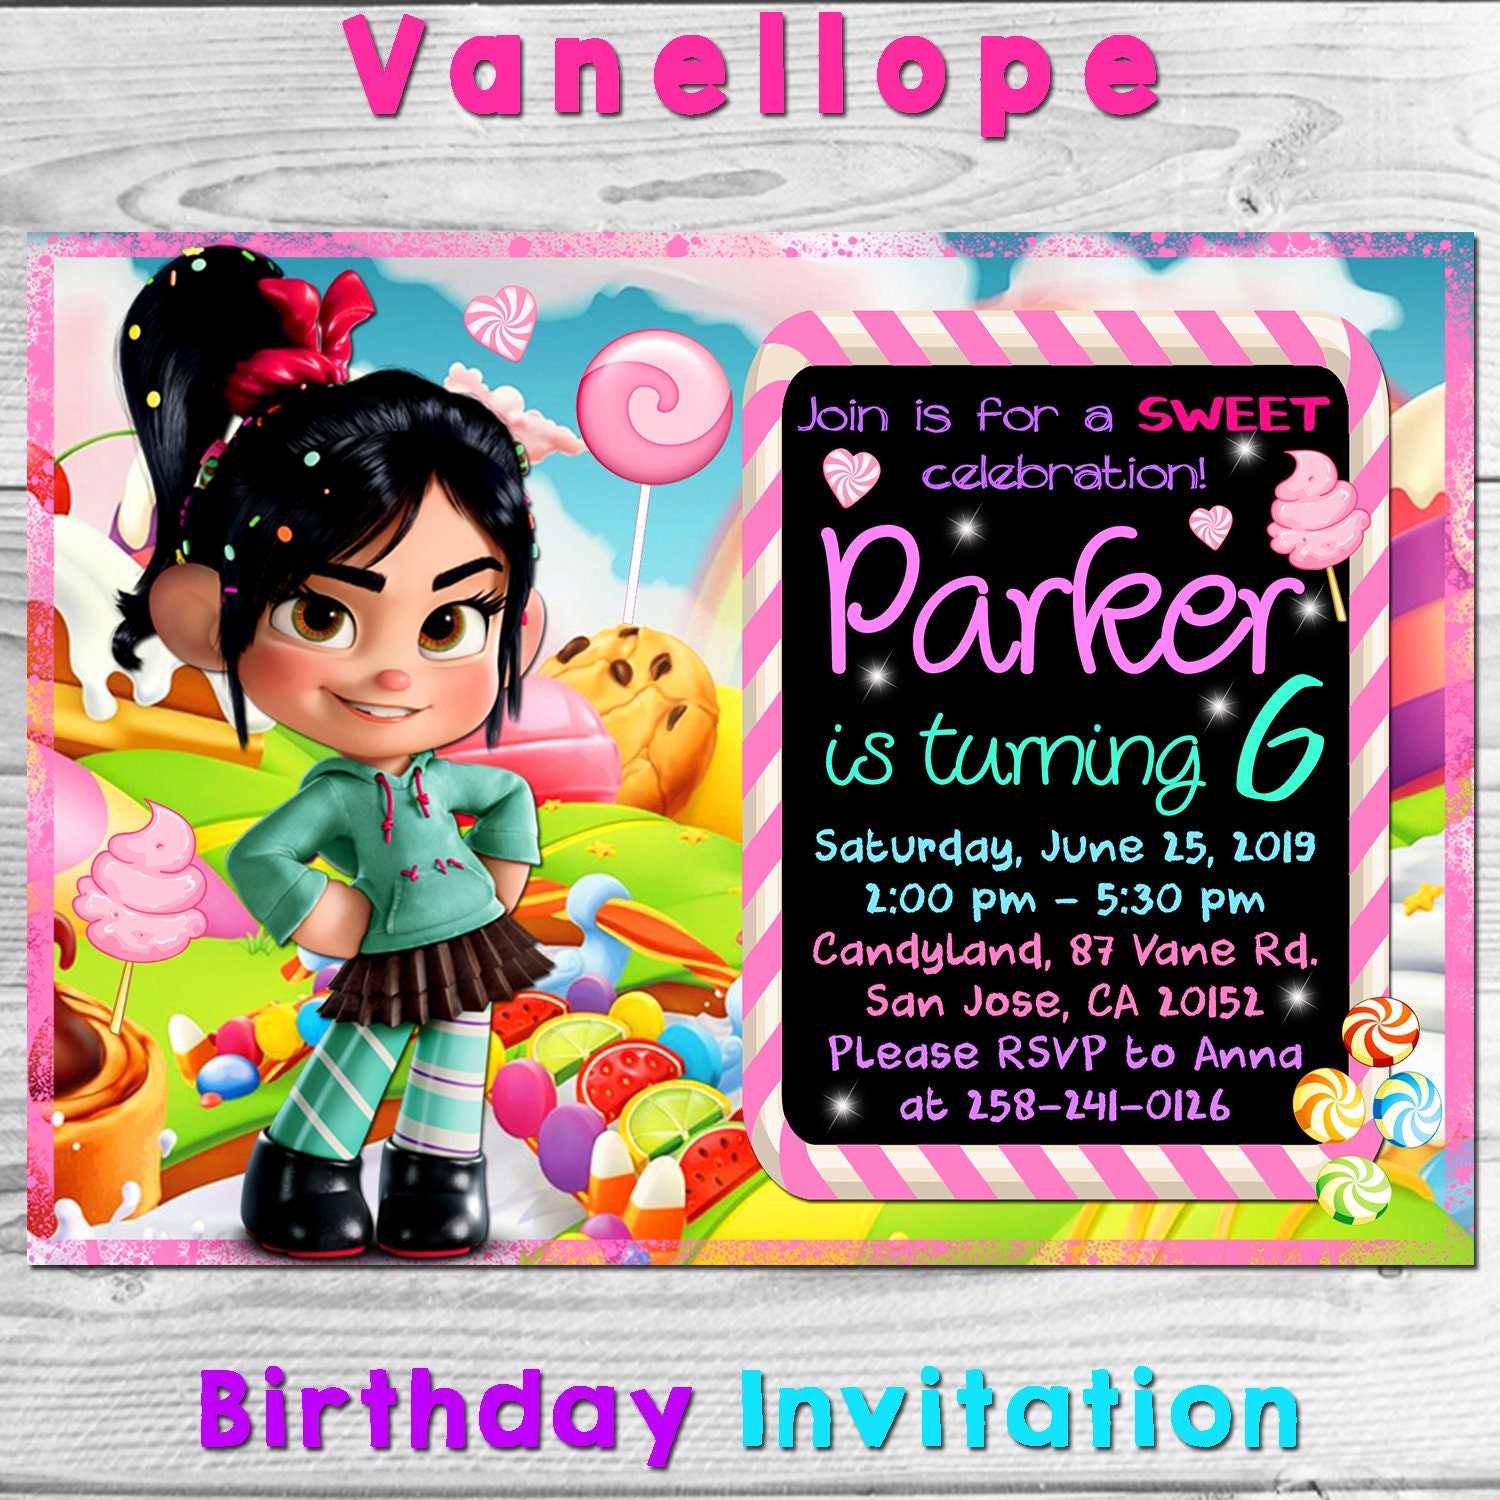 Vanellope Invitation Wreck It Ralph Party Vanellope Birthday